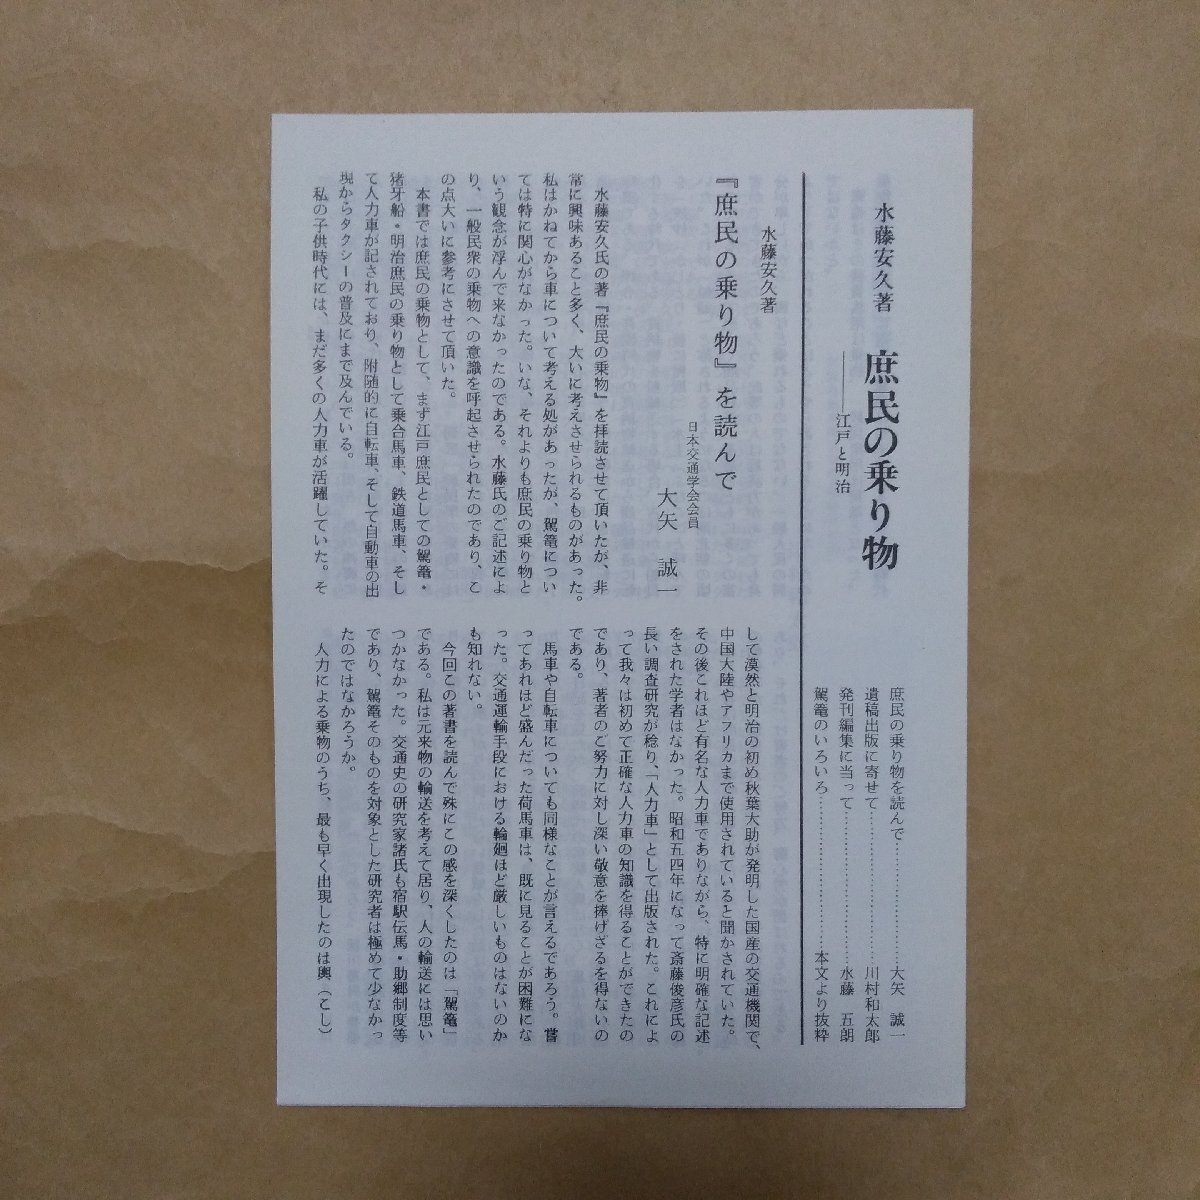 *... vehicle Edo * Meiji water wistaria cheap . work writing .. regular price 2000 jpy Showa era 59 year the first version * appendix attaching 